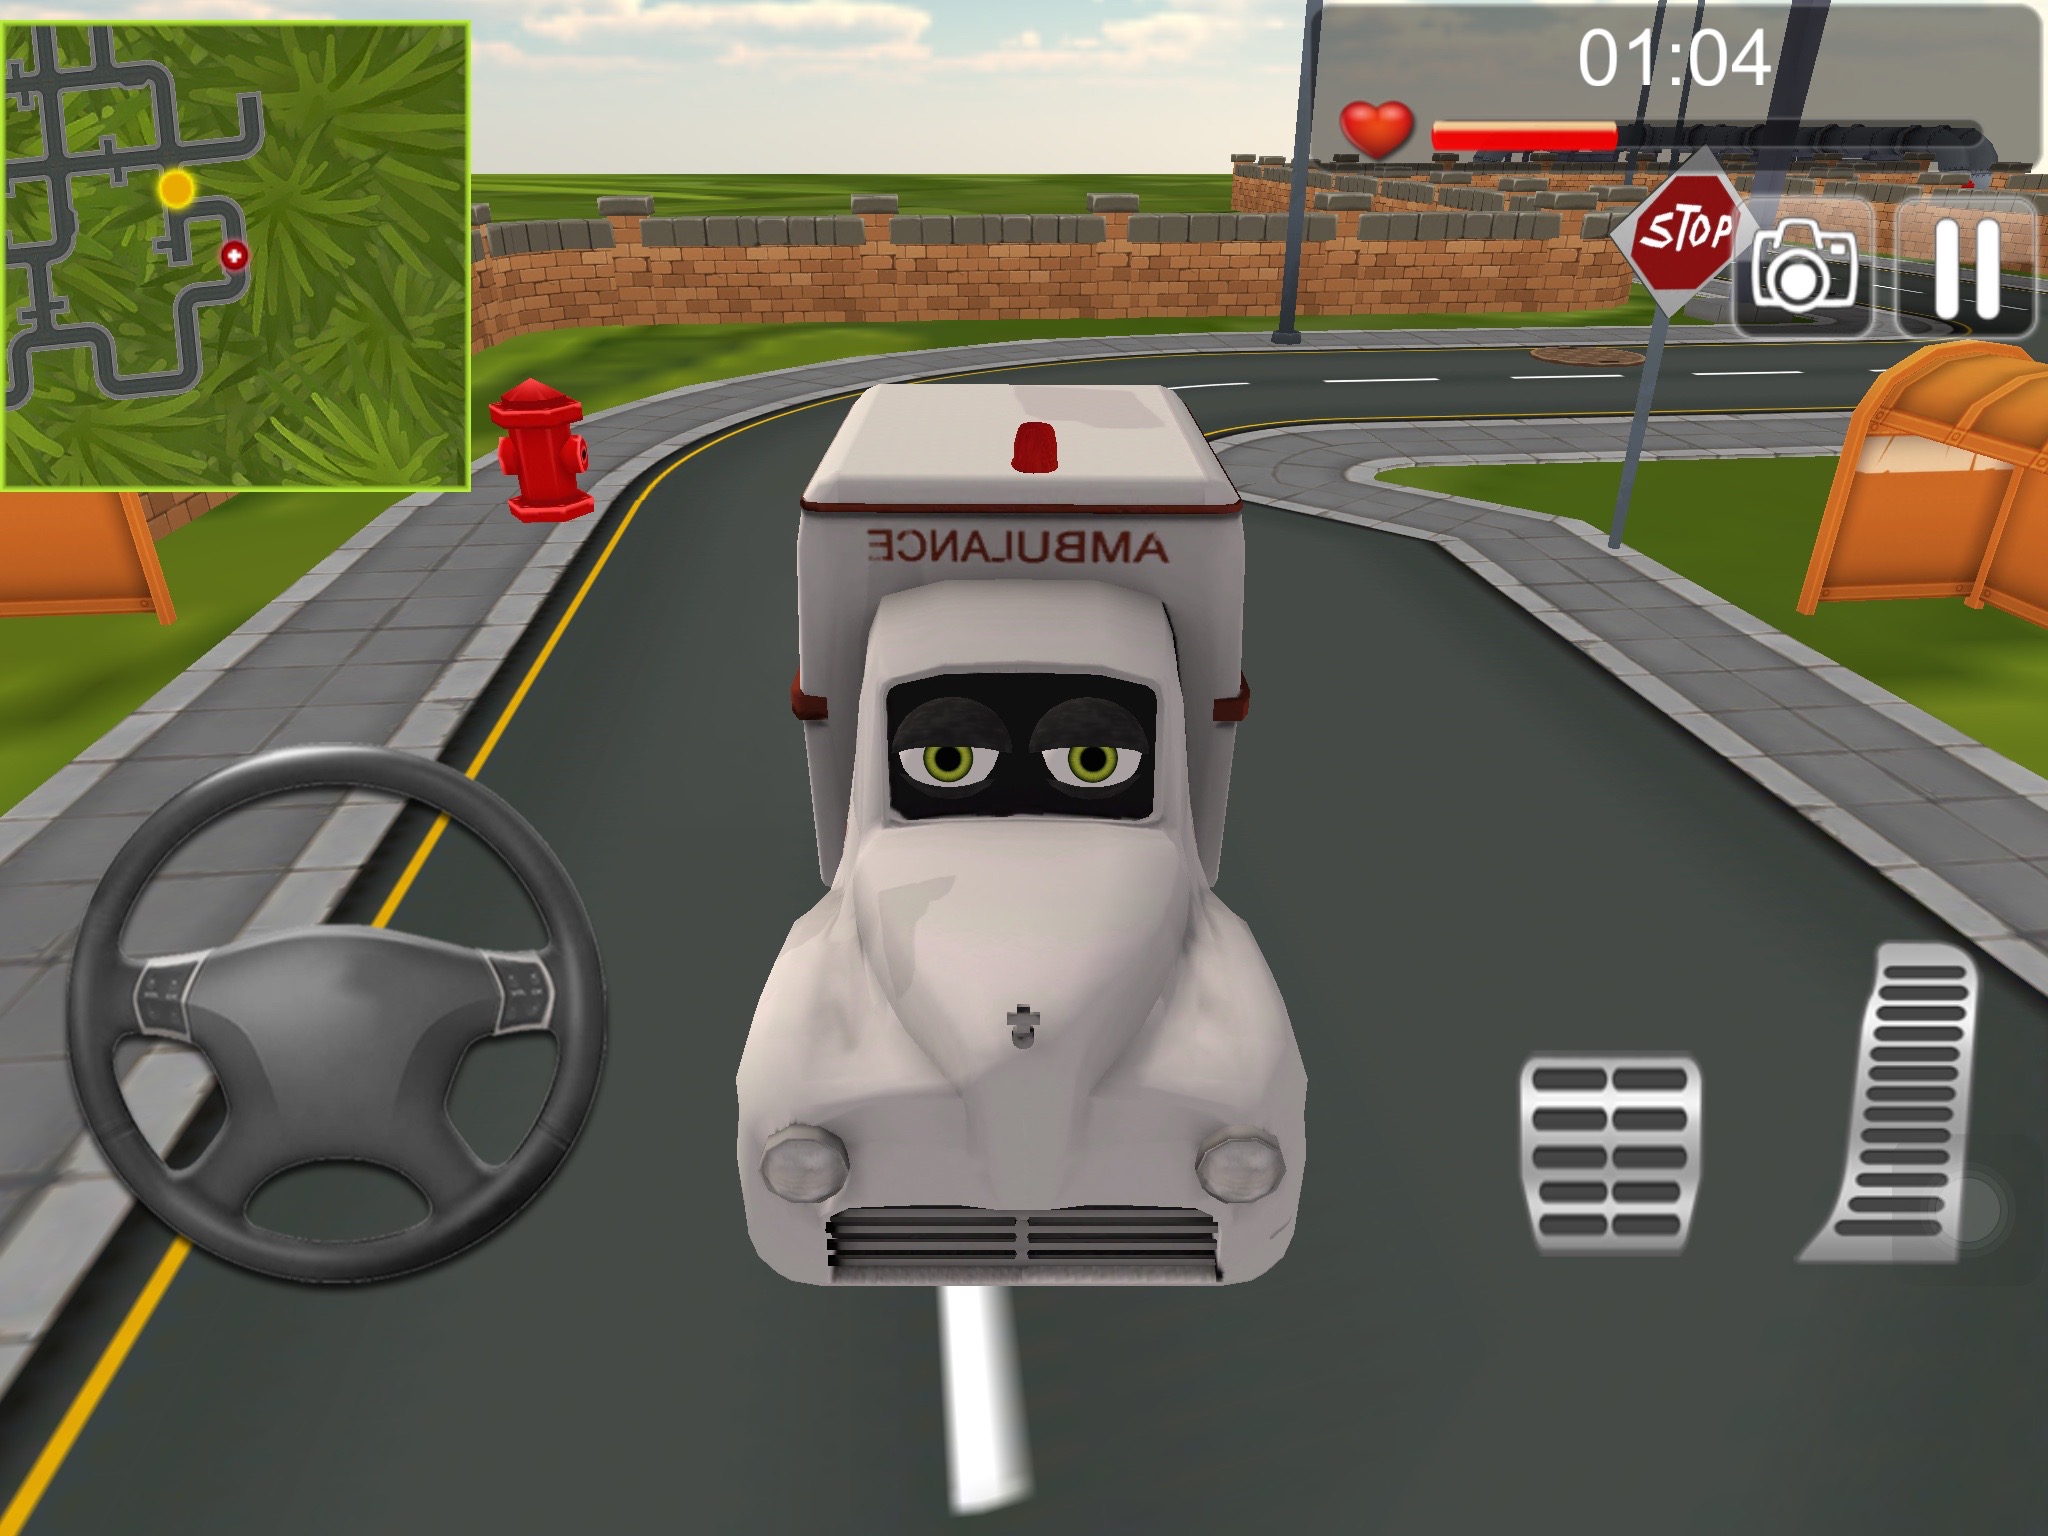 Crazy Ambulance City Racer 3D